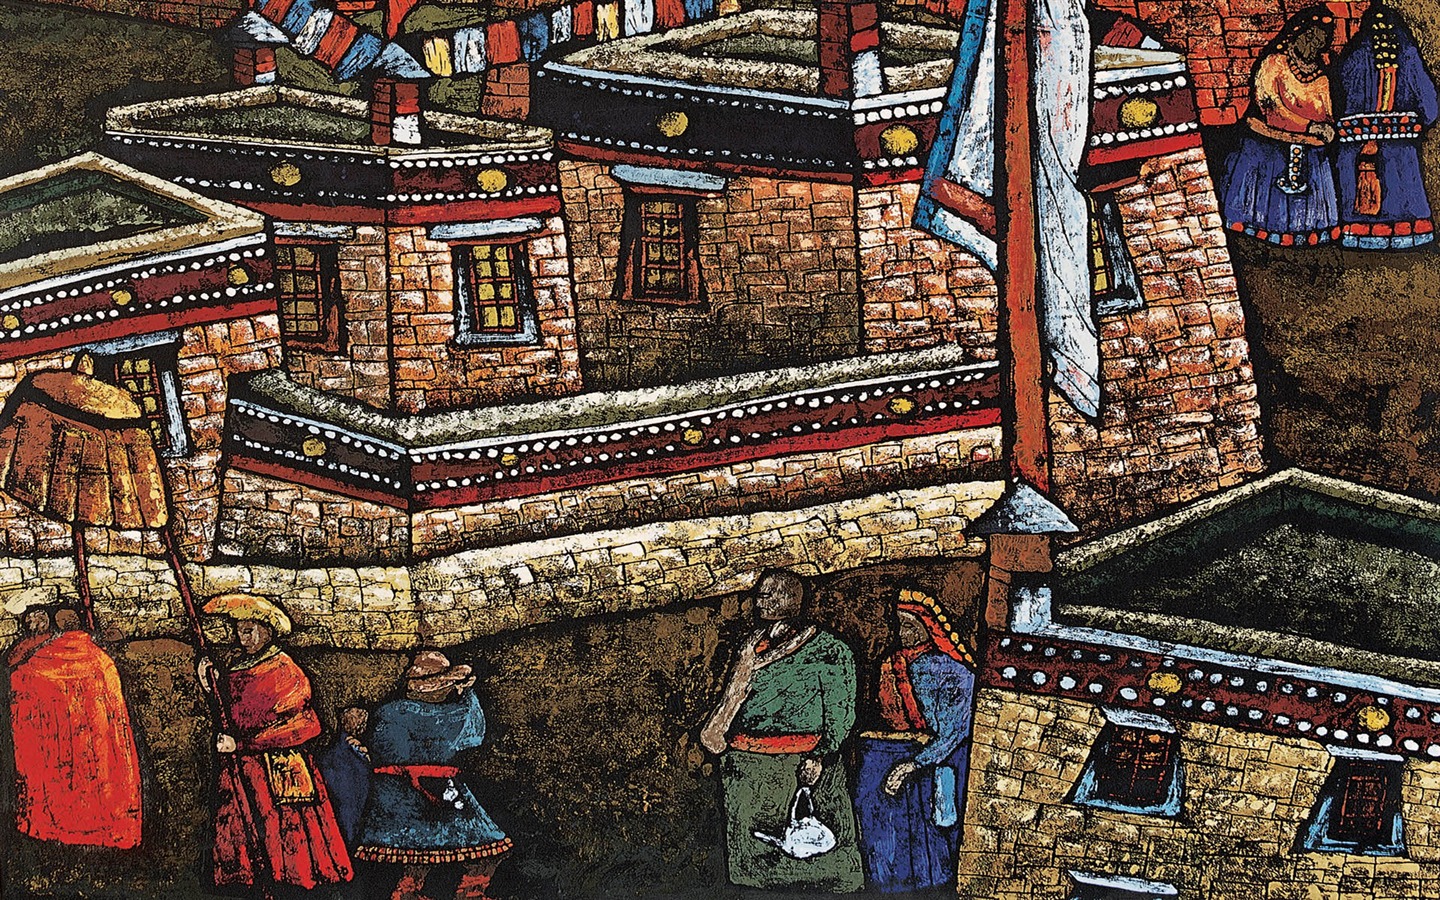 Cheung Pakistan fond d'écran d'impression du Tibet (1) #19 - 1440x900